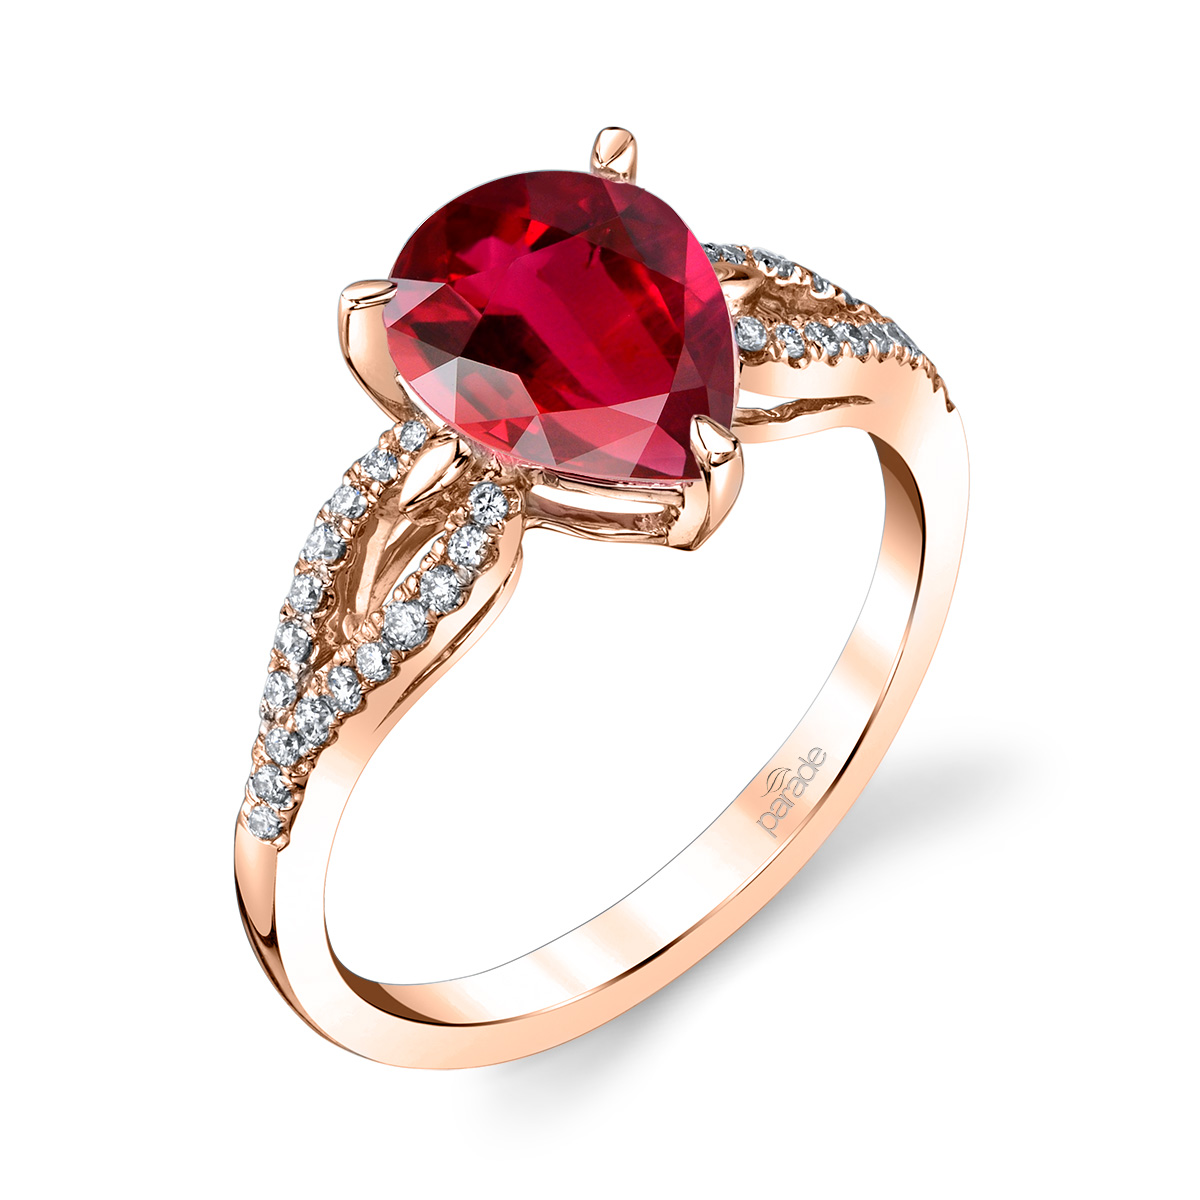 Designer diamond and rubellite tourmaline ring by Parade Design.